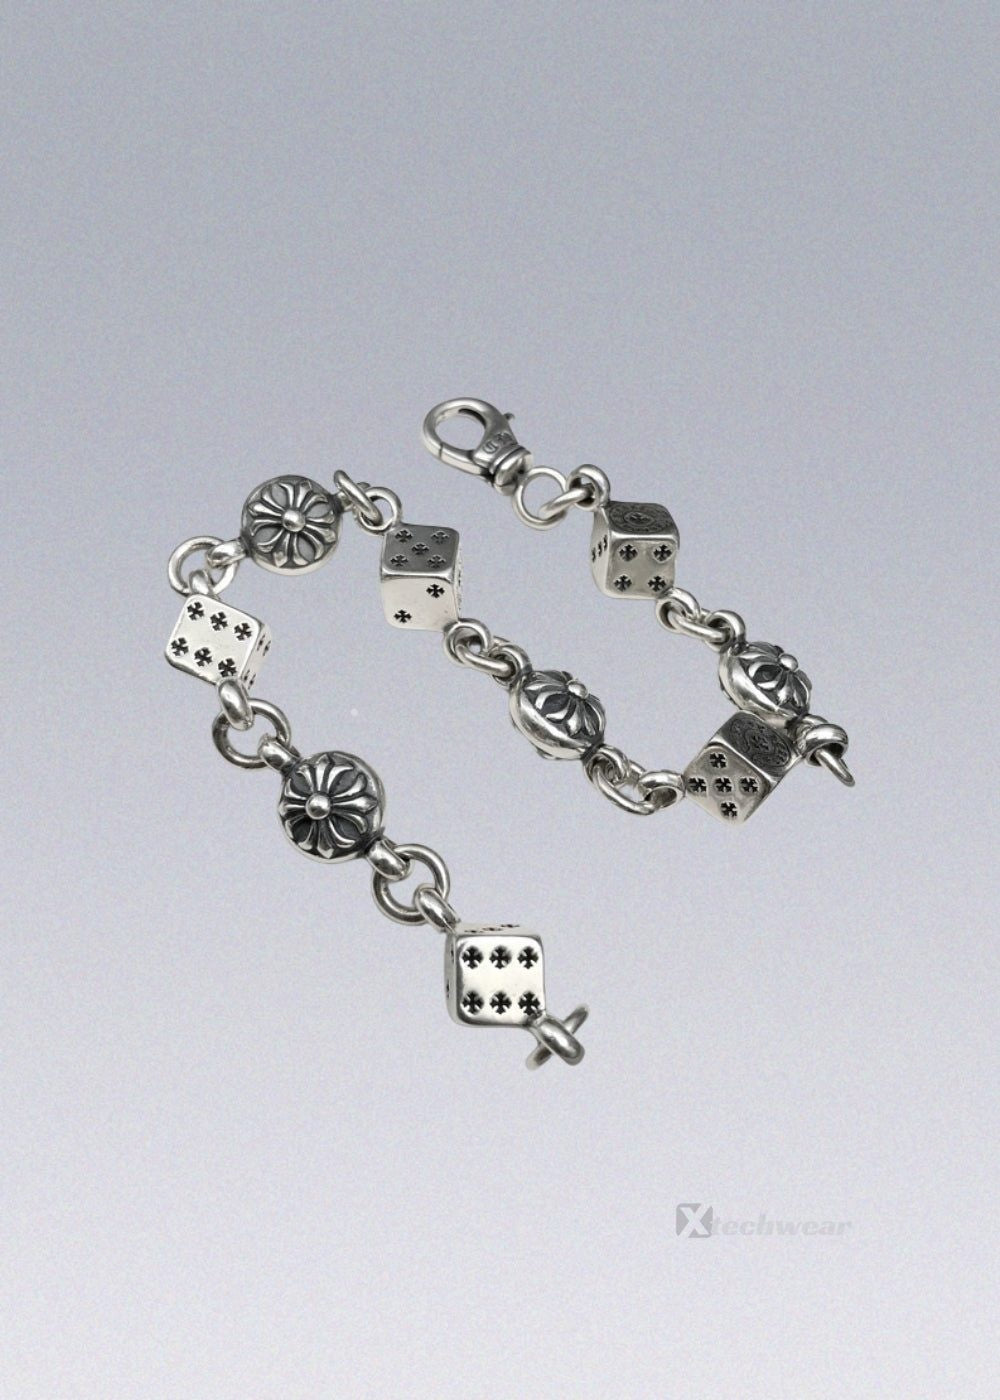 chrome hearts bracelet